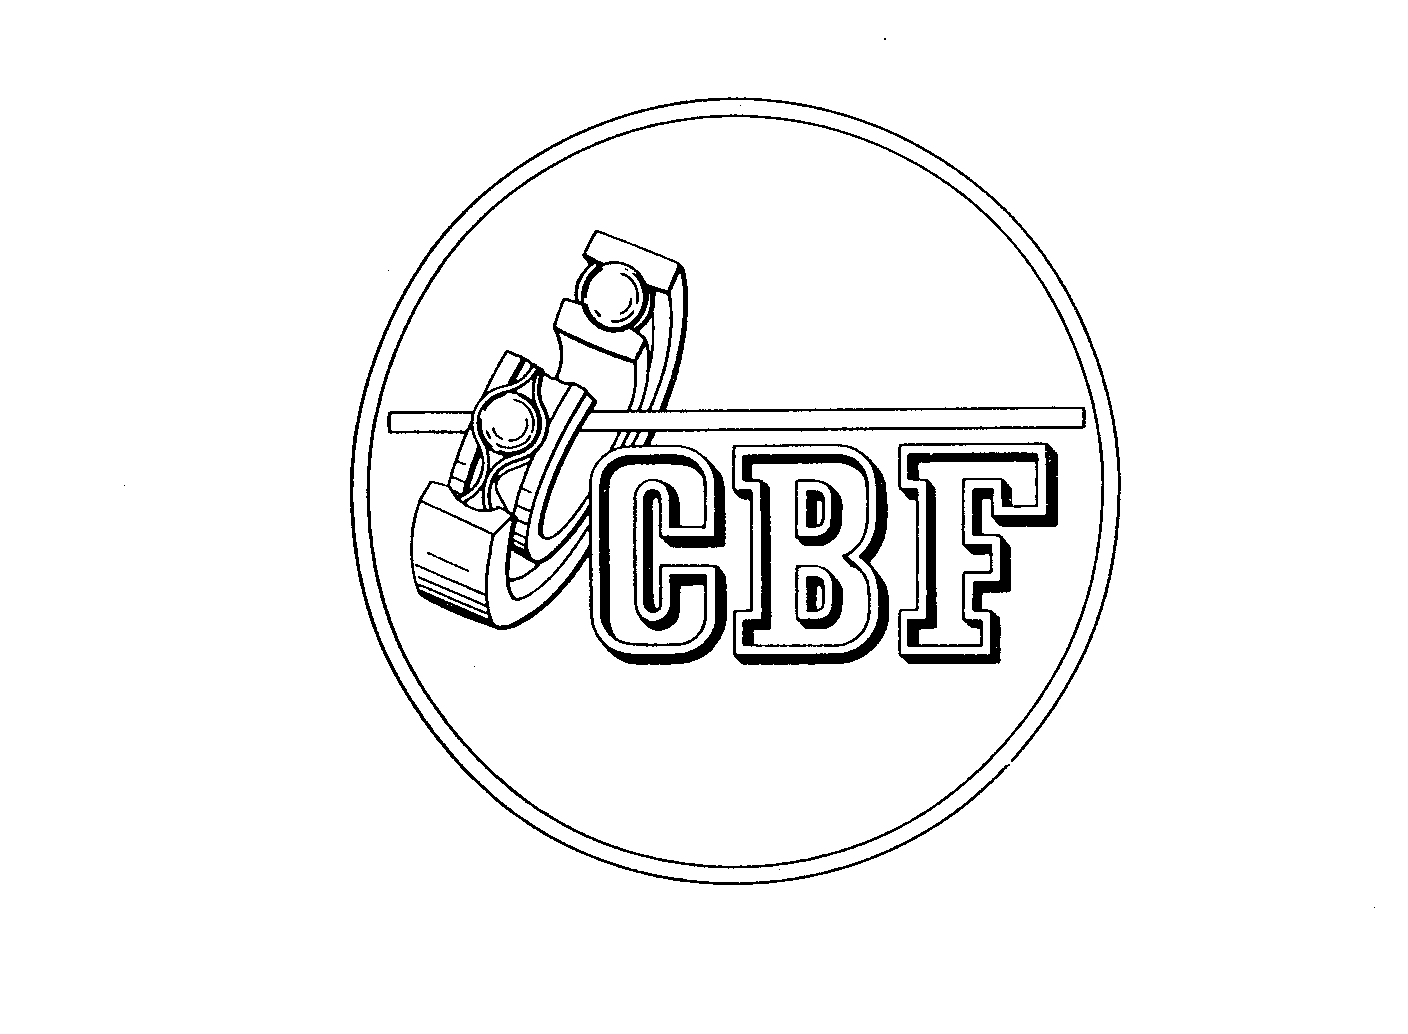 Trademark Logo CBF